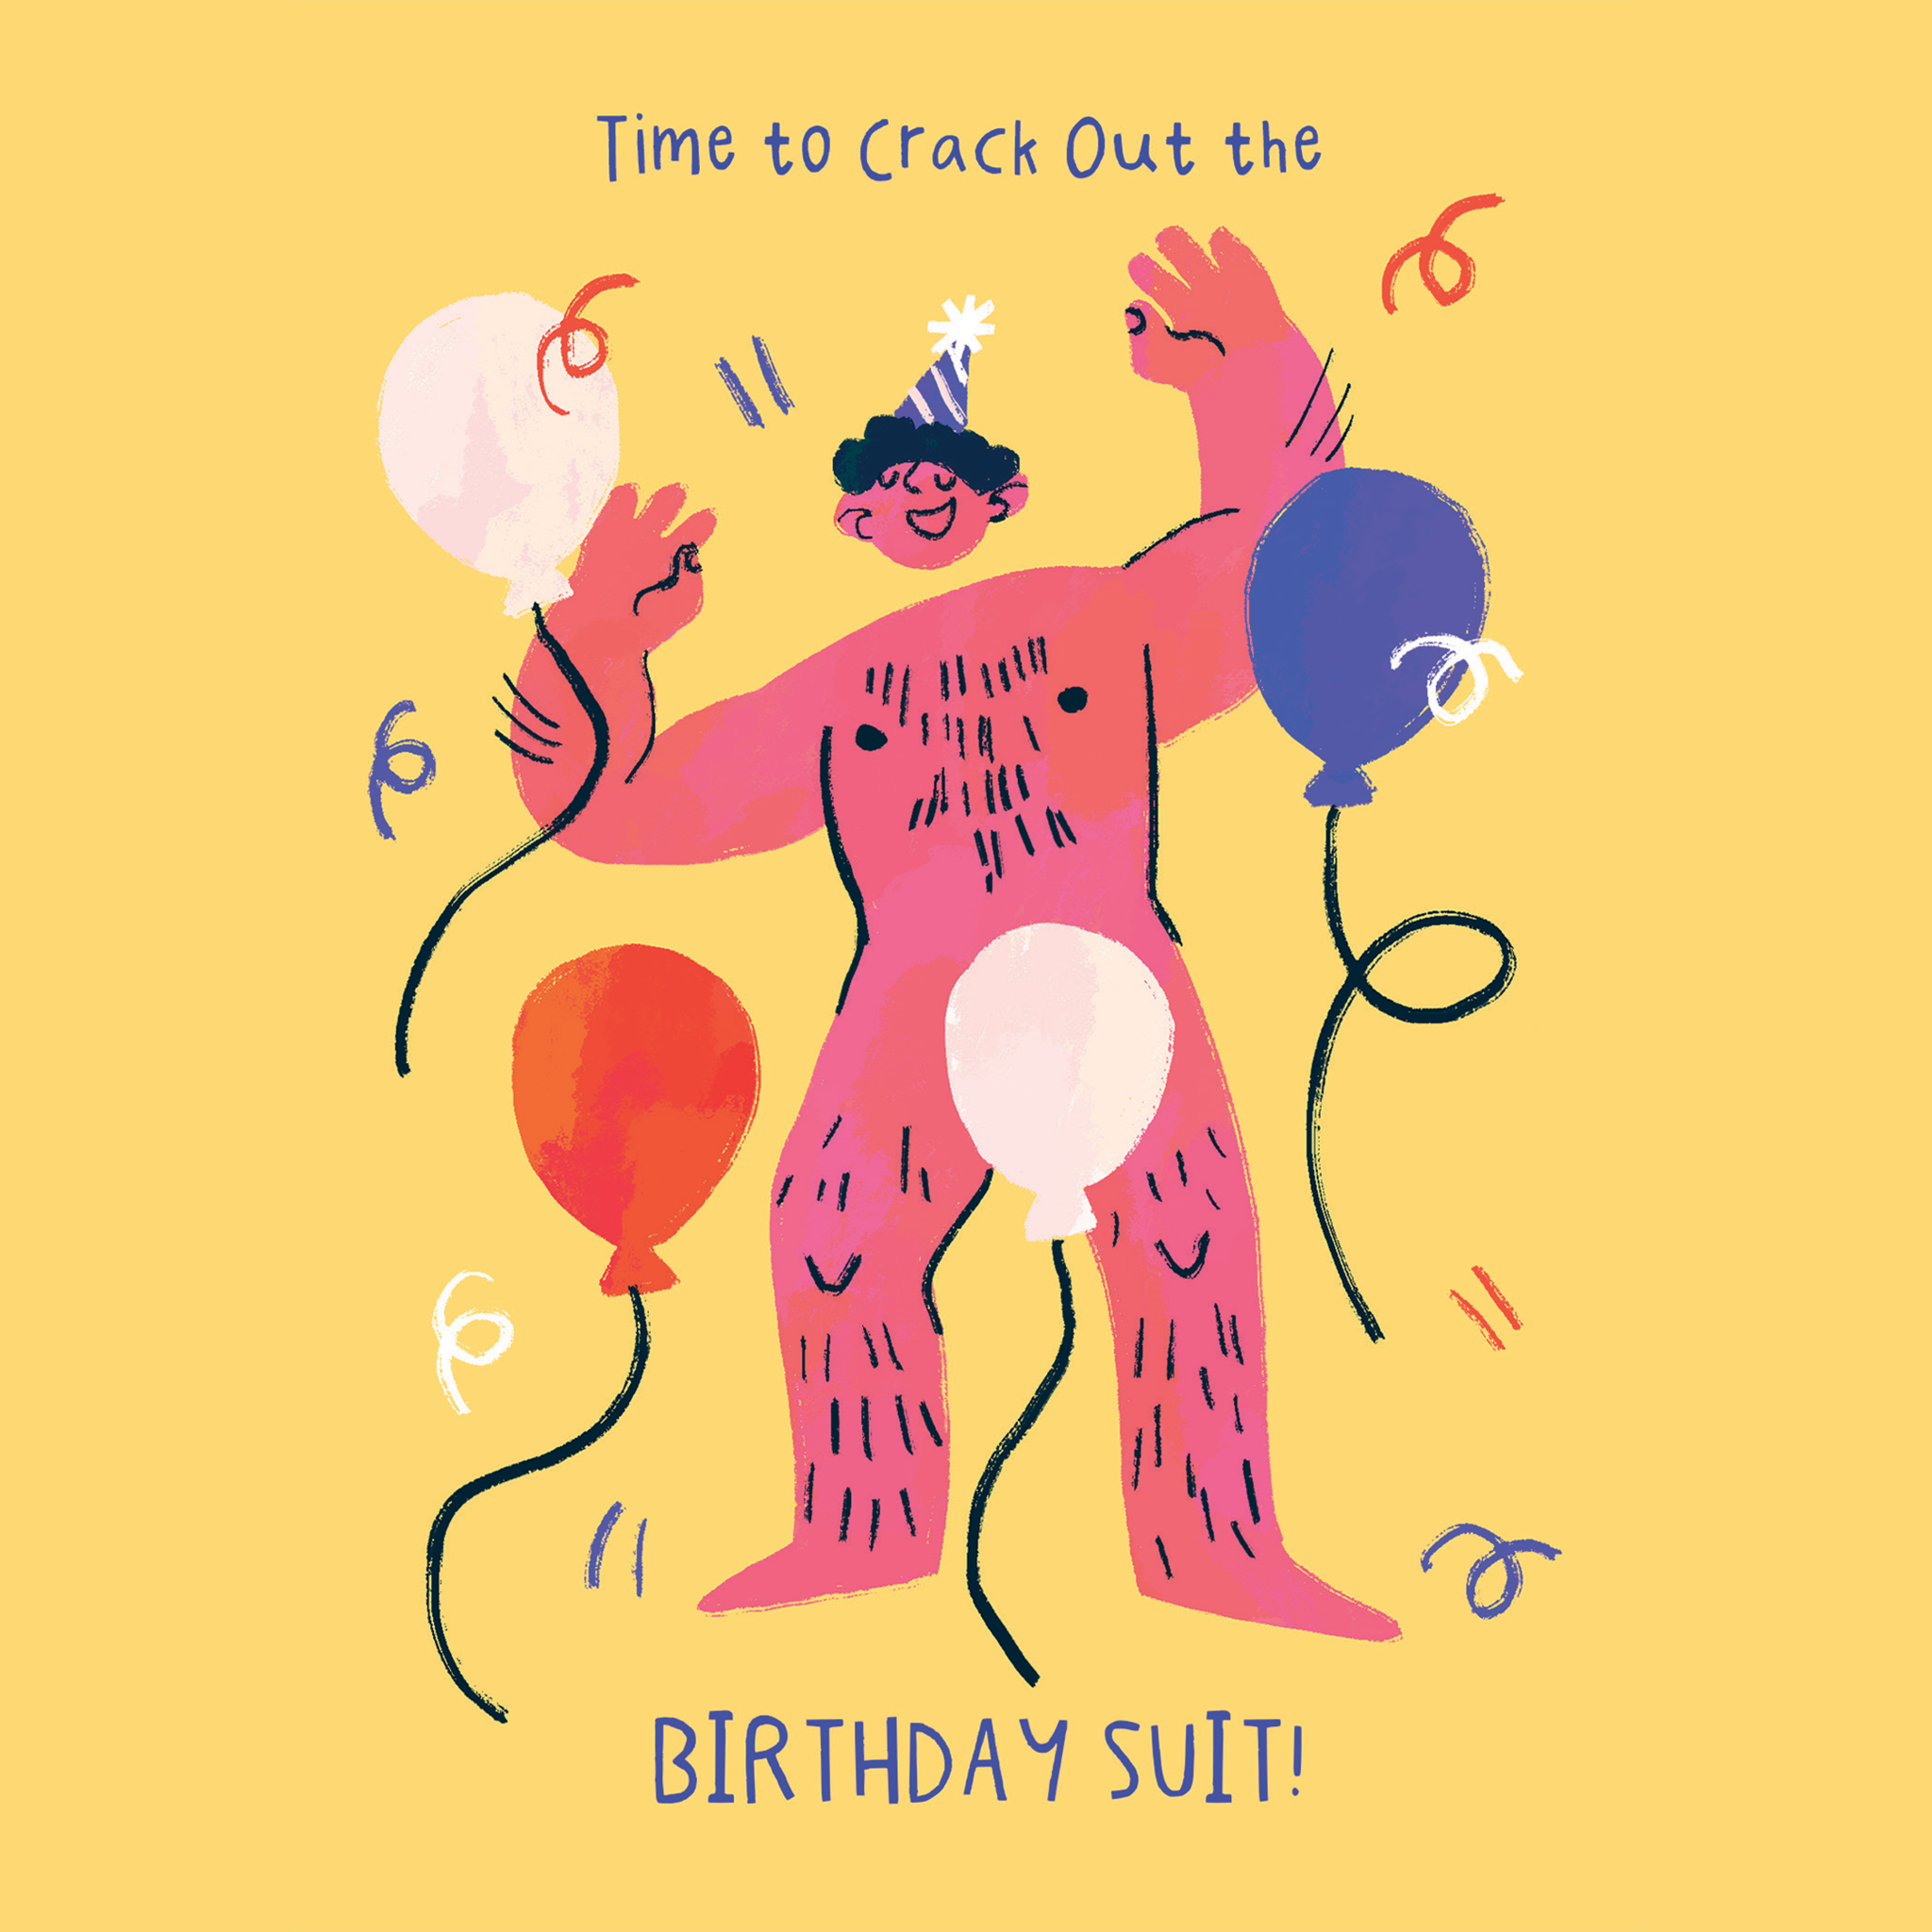 Birthday Suit Naked Man Birthday Card Boomf